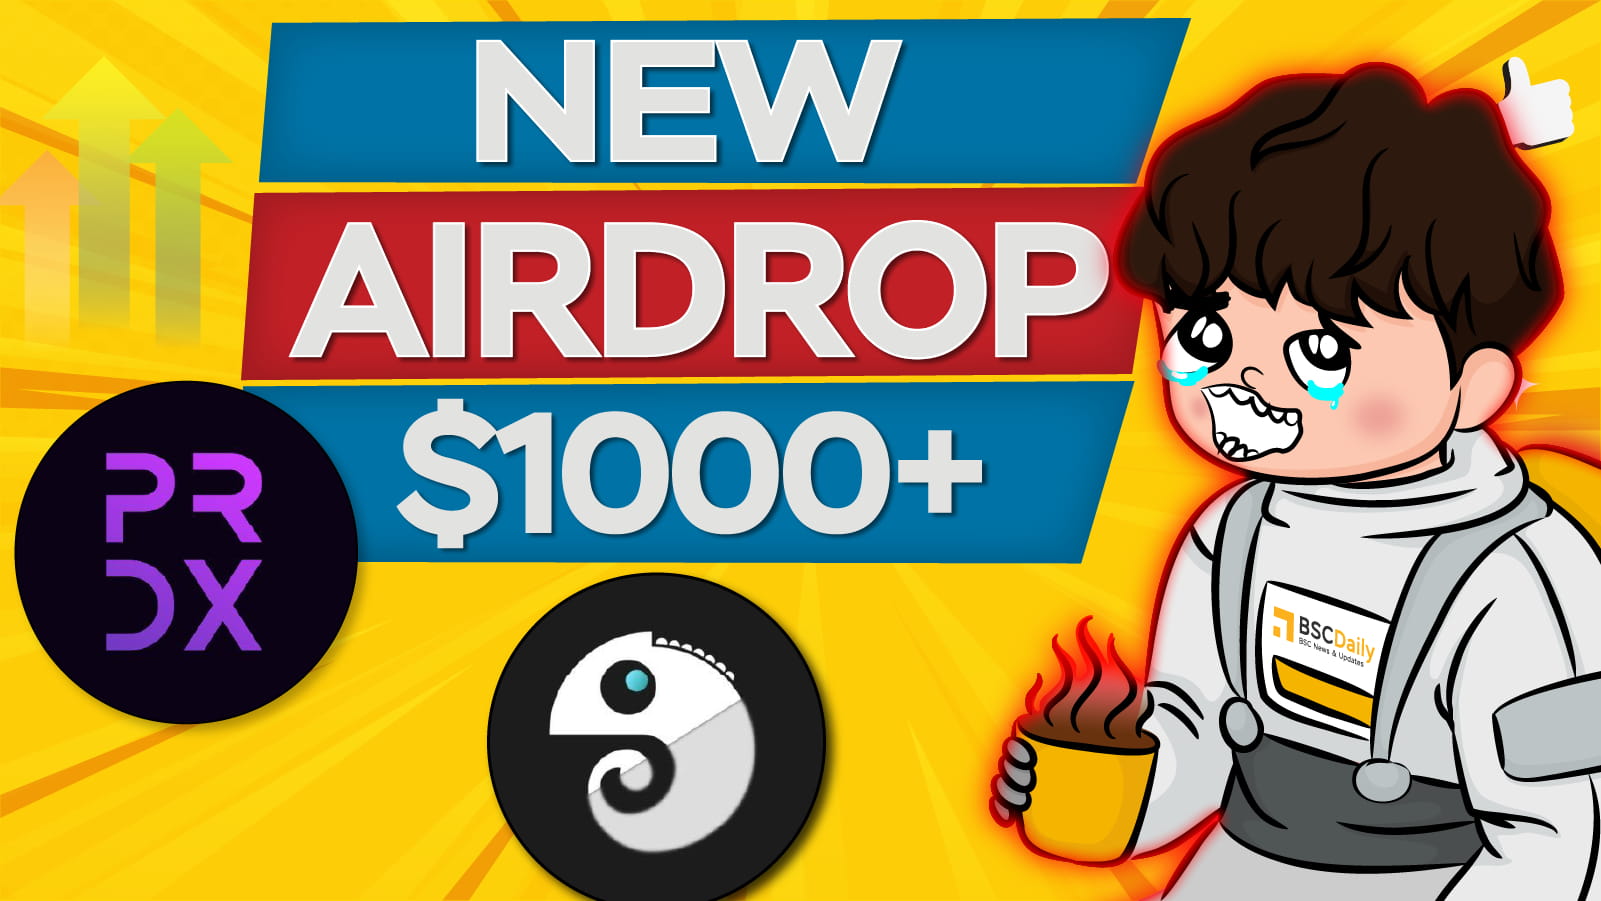 NEW AIRDROP $1000+ 